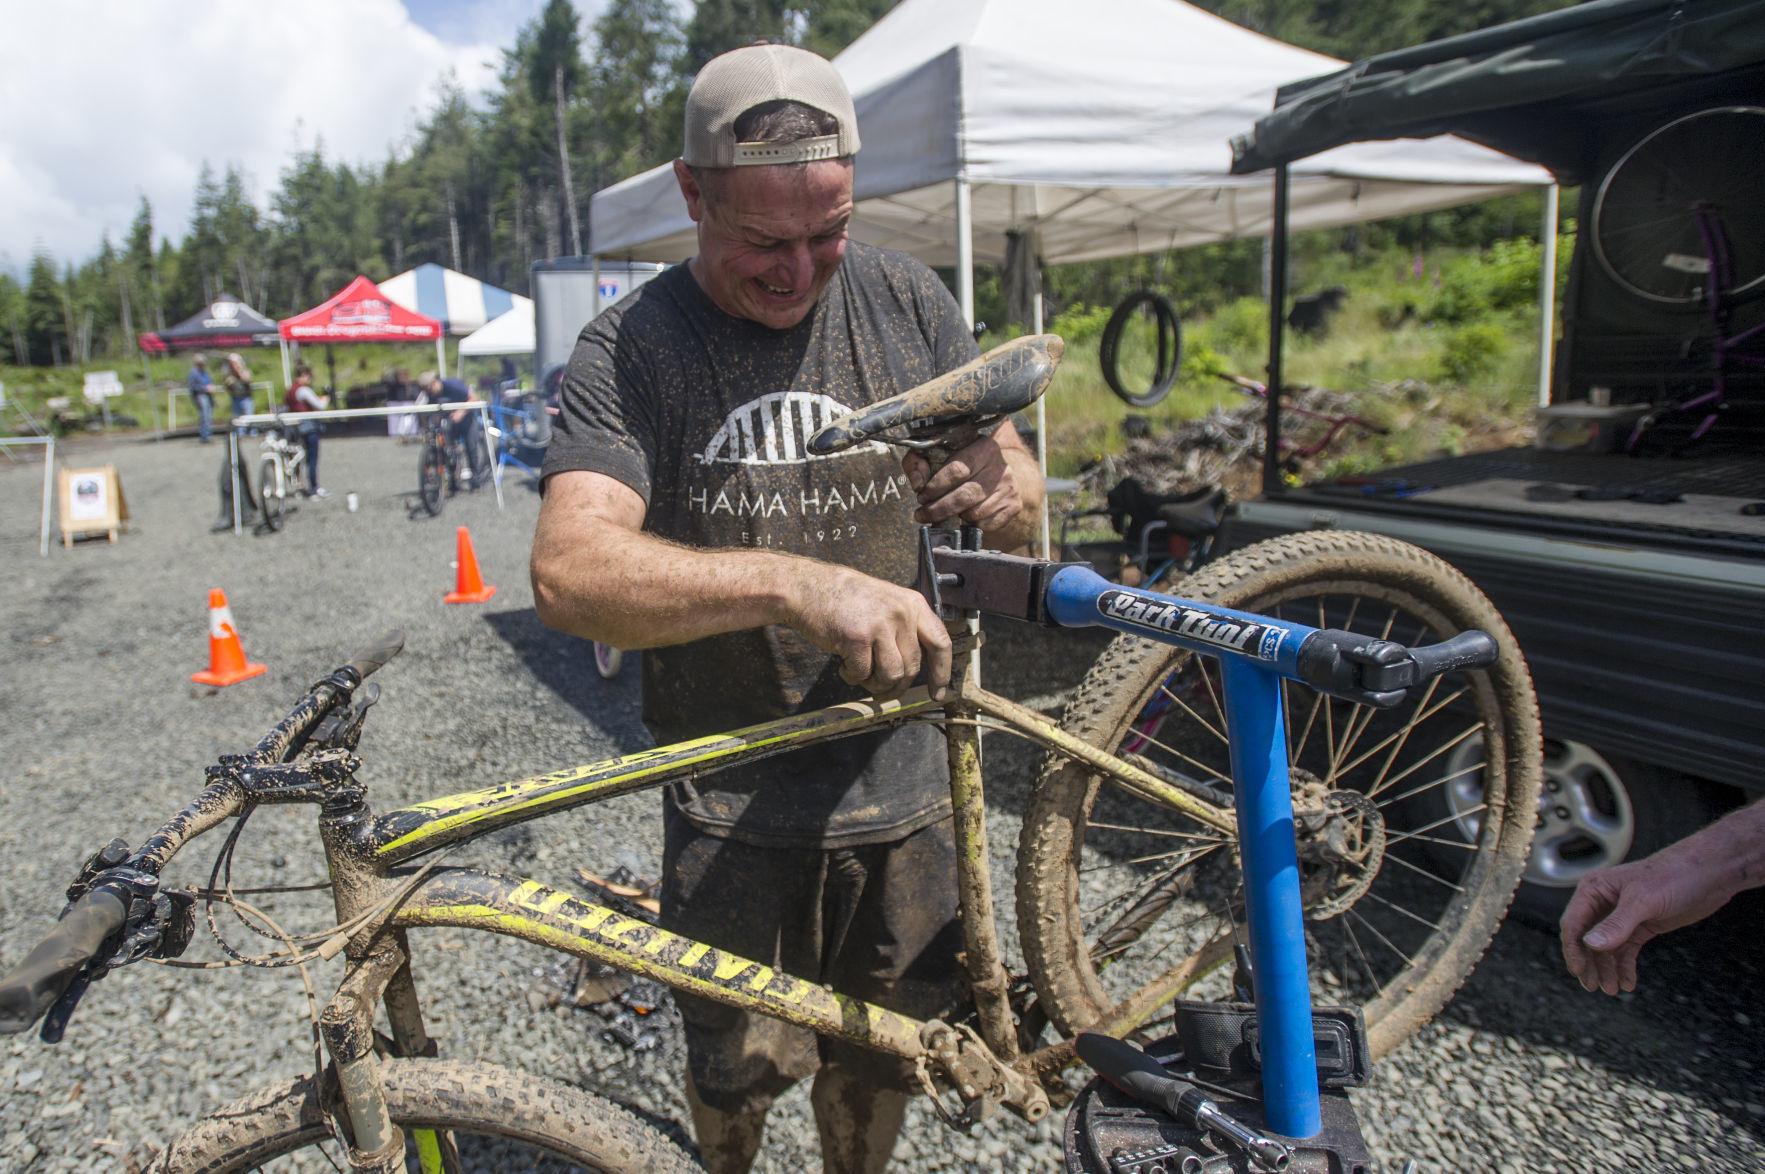 Whiskey Run Mountain Bike Trails celebrates its new routes with